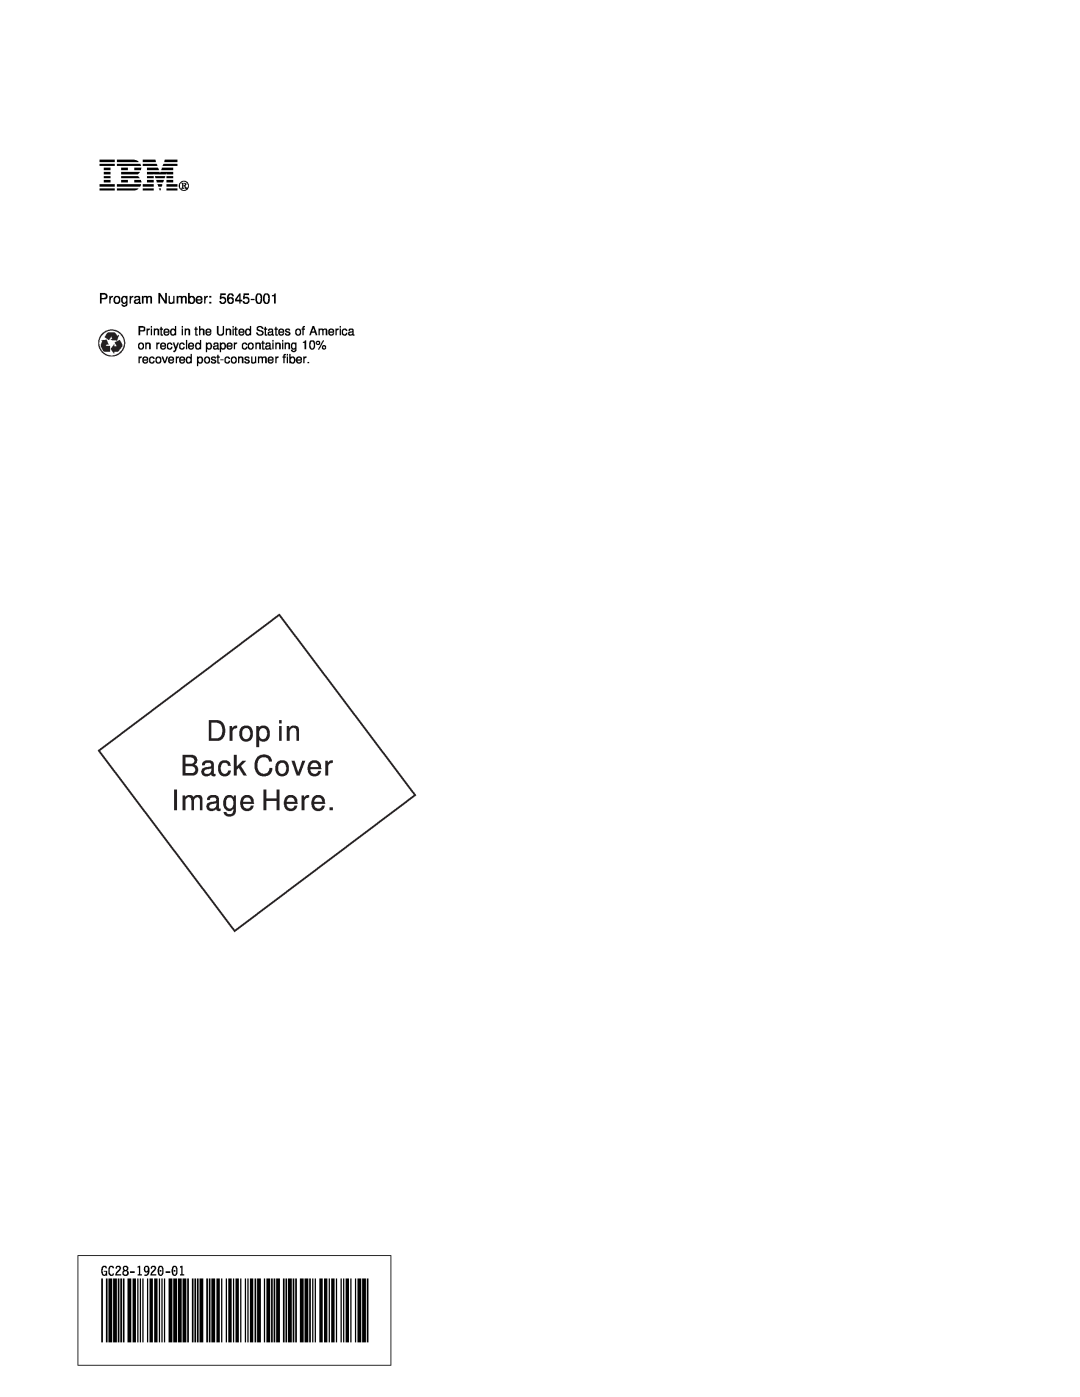 IBM GC28-1920-01 manual Ibm, Drop in Back Cover Image Here, GC28-192ð-ð1 